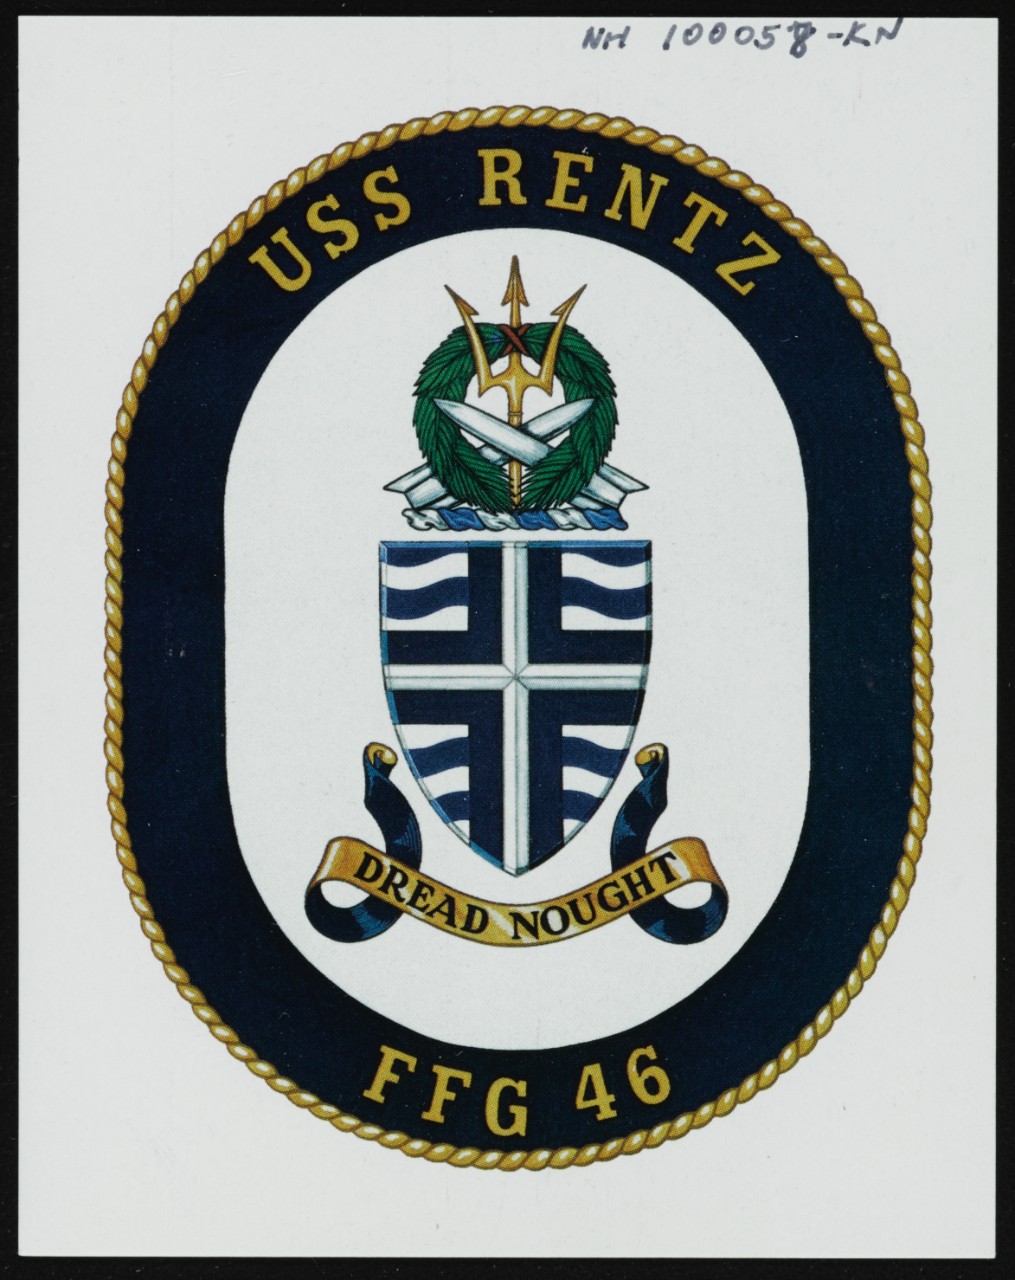 Insignia: USS RENTZ (FFG-46) "Dread Nought"